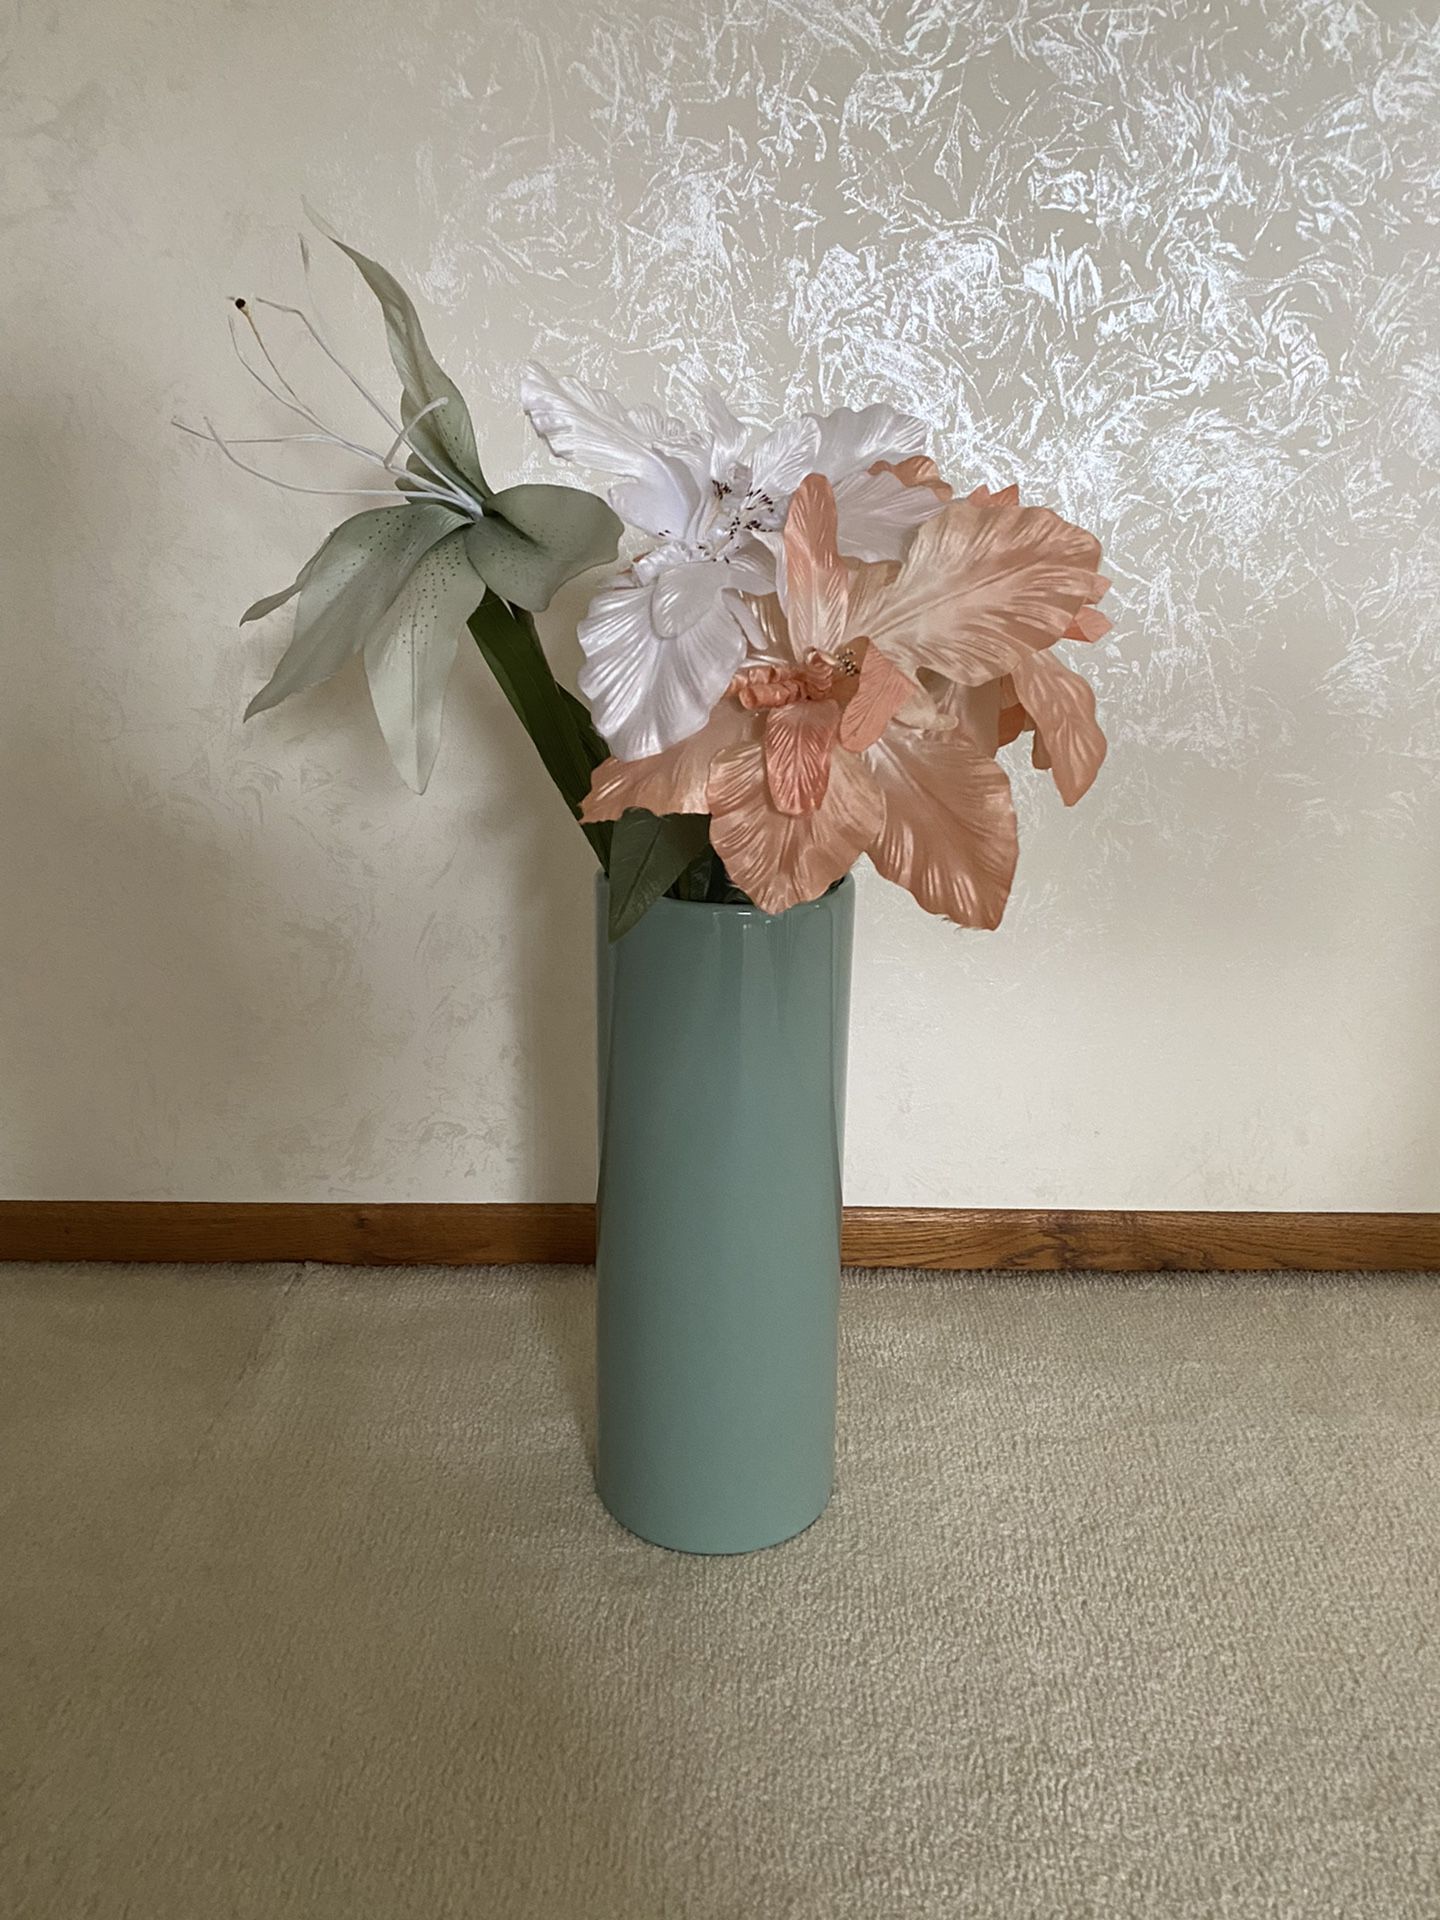 Vase With Flowers, Vase is Haeger Brand